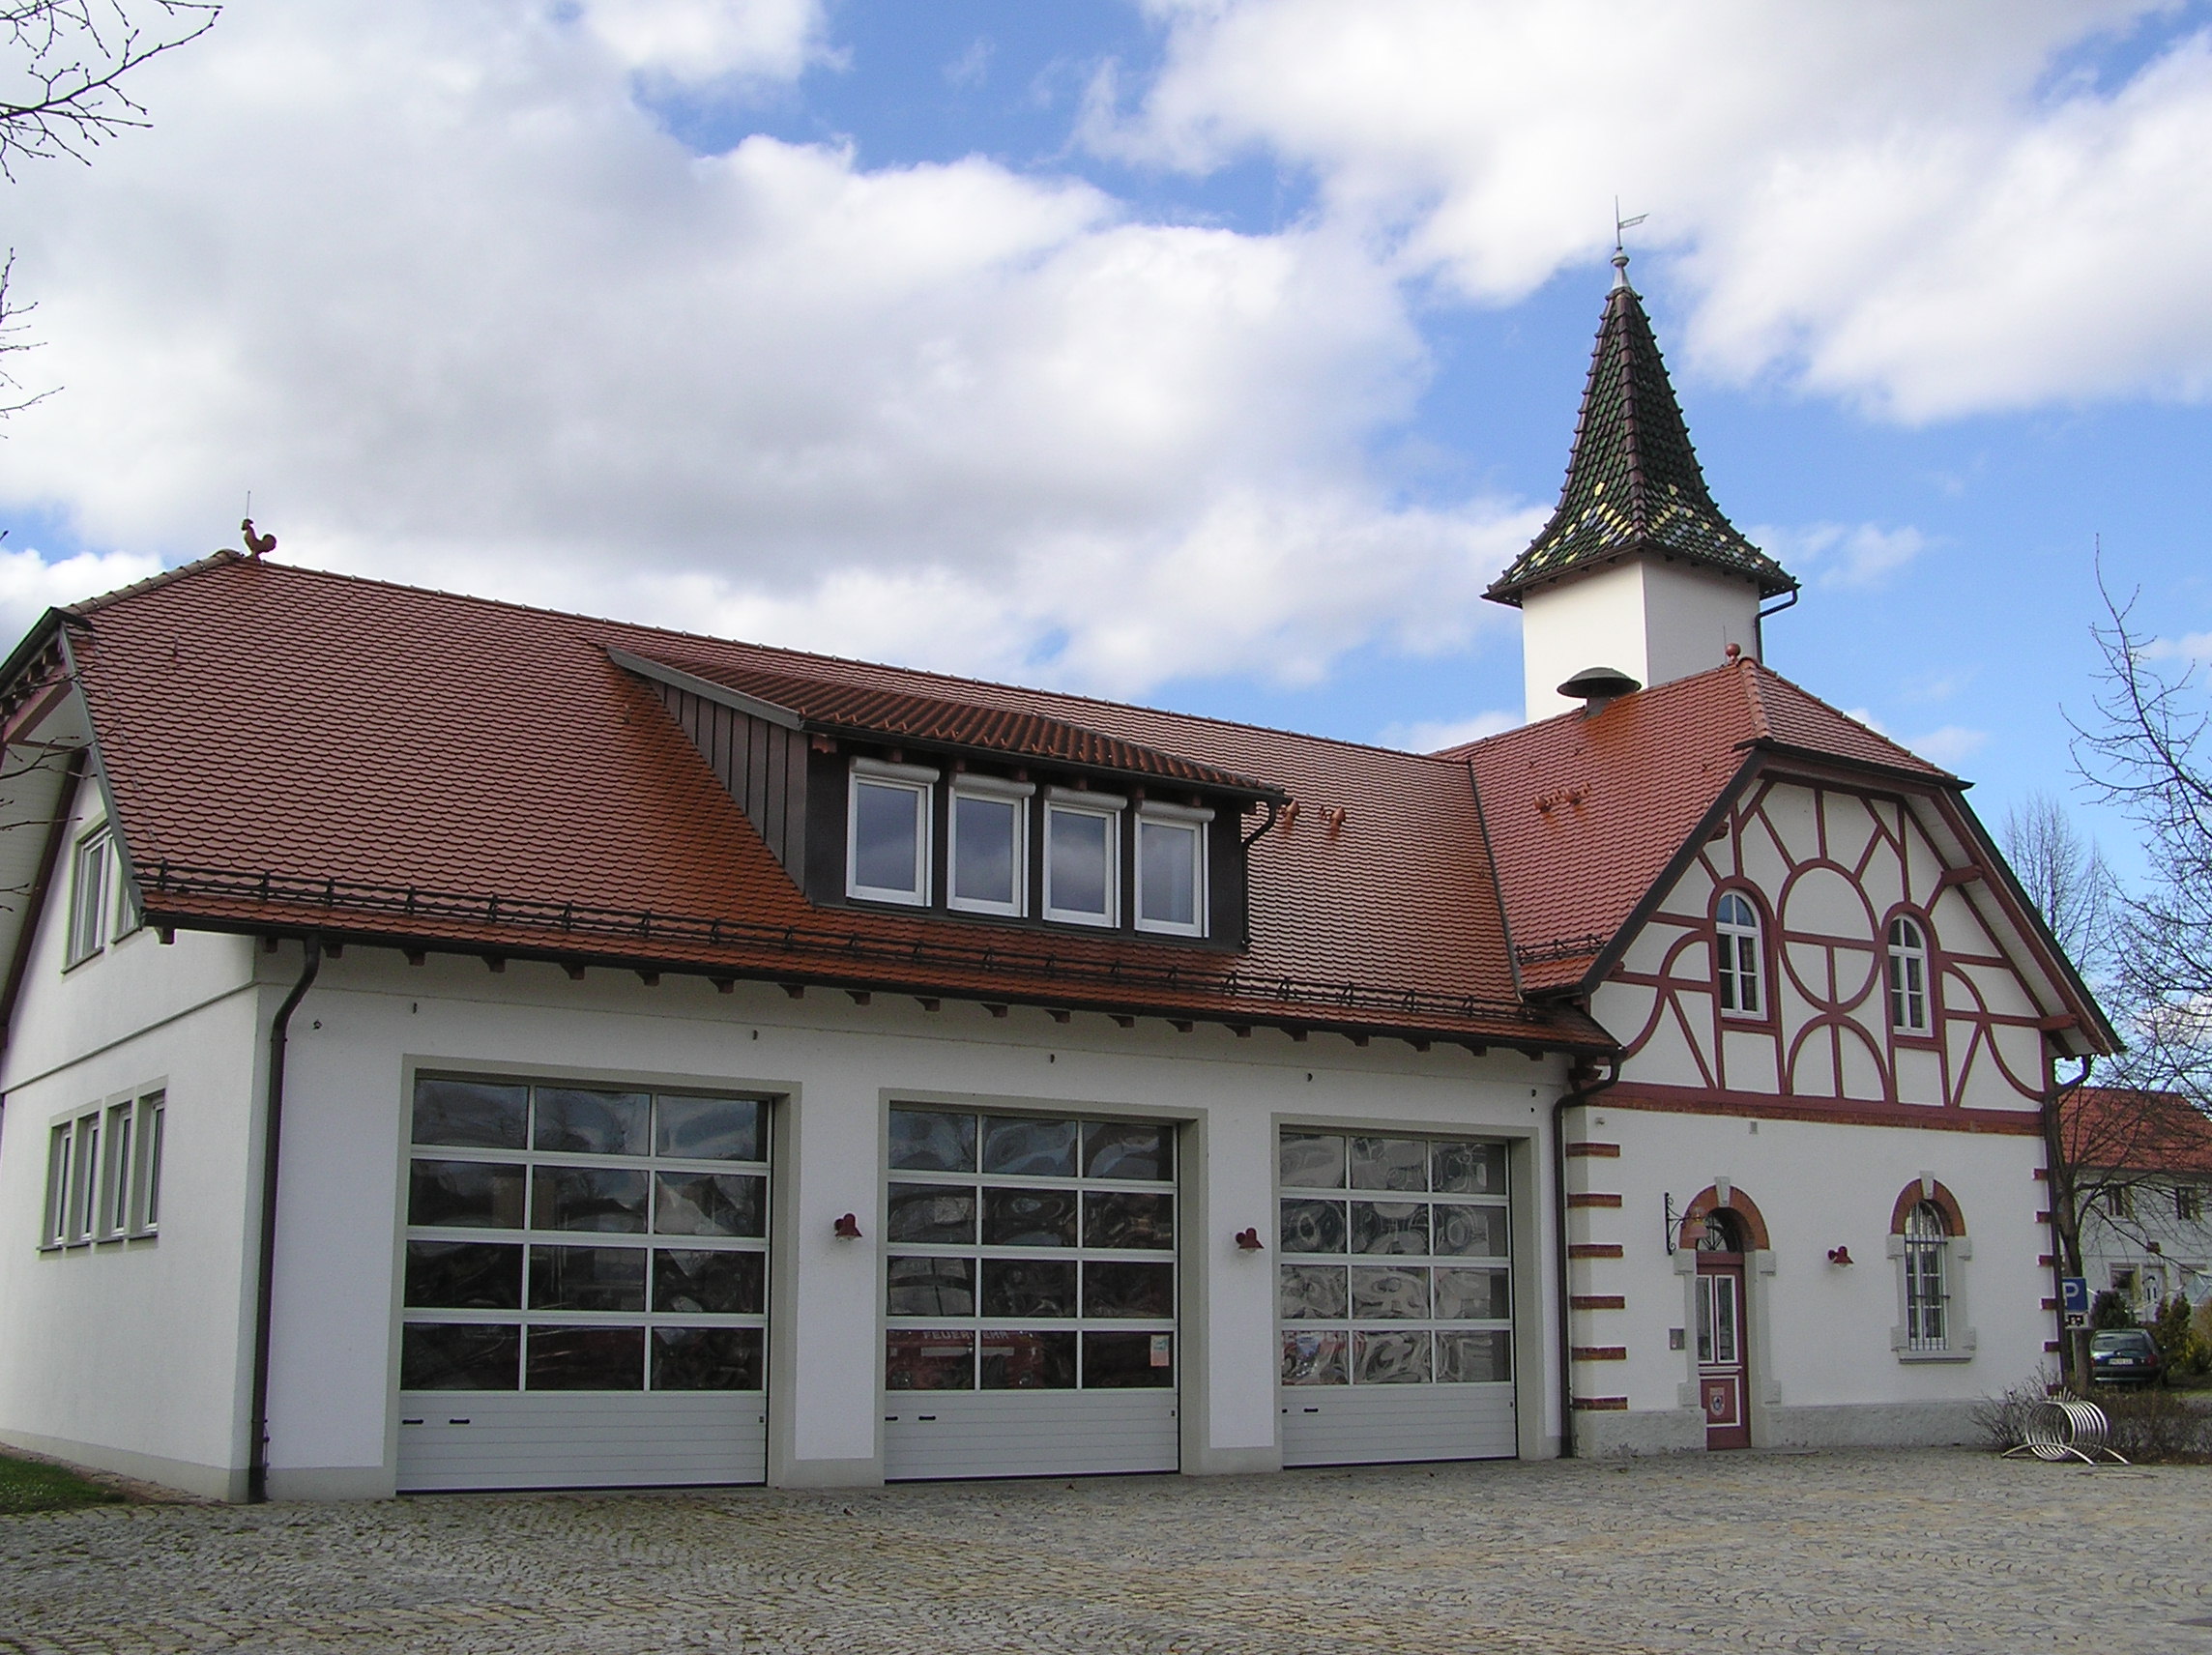 Feuerhaus